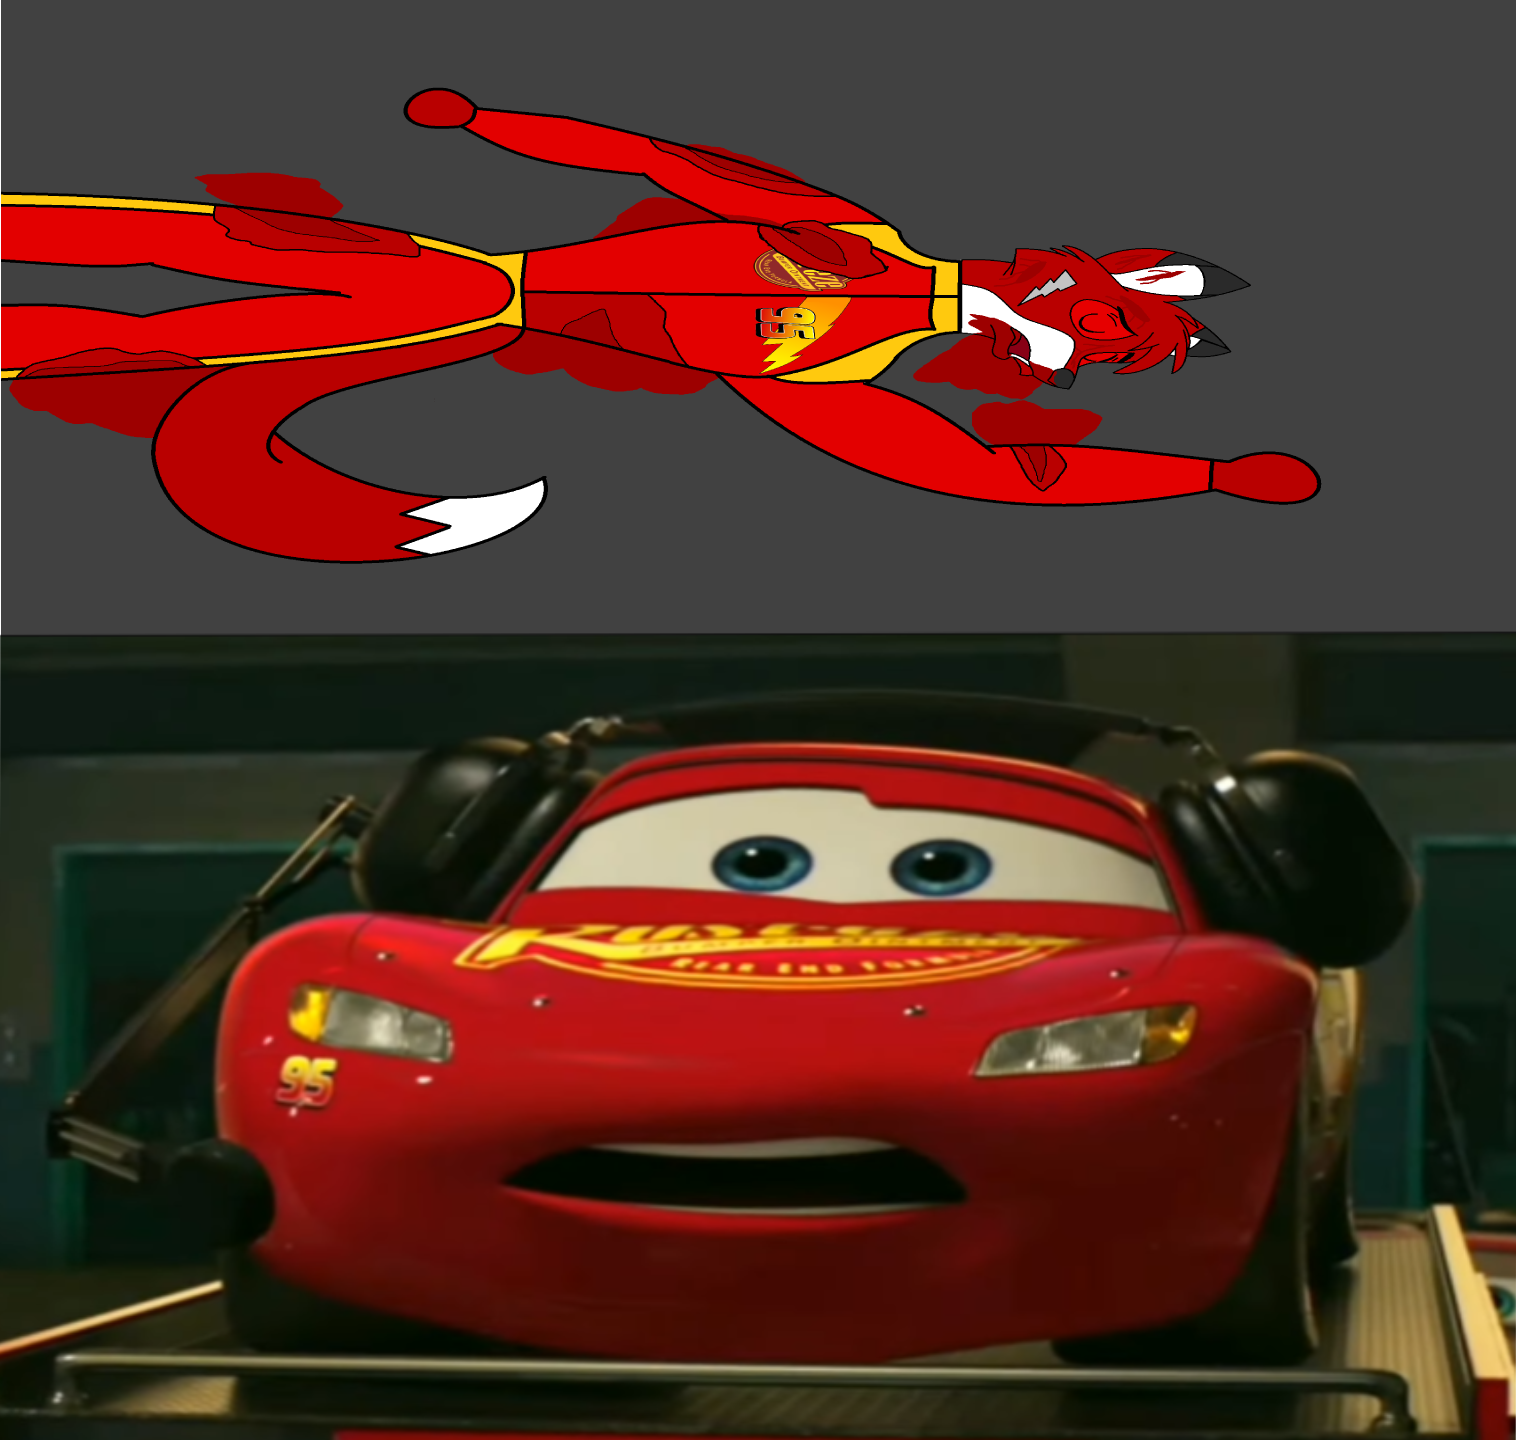 Animan Studios Meme (Version Meme Pixar Cars) by XxxFranKTHxxX on DeviantArt